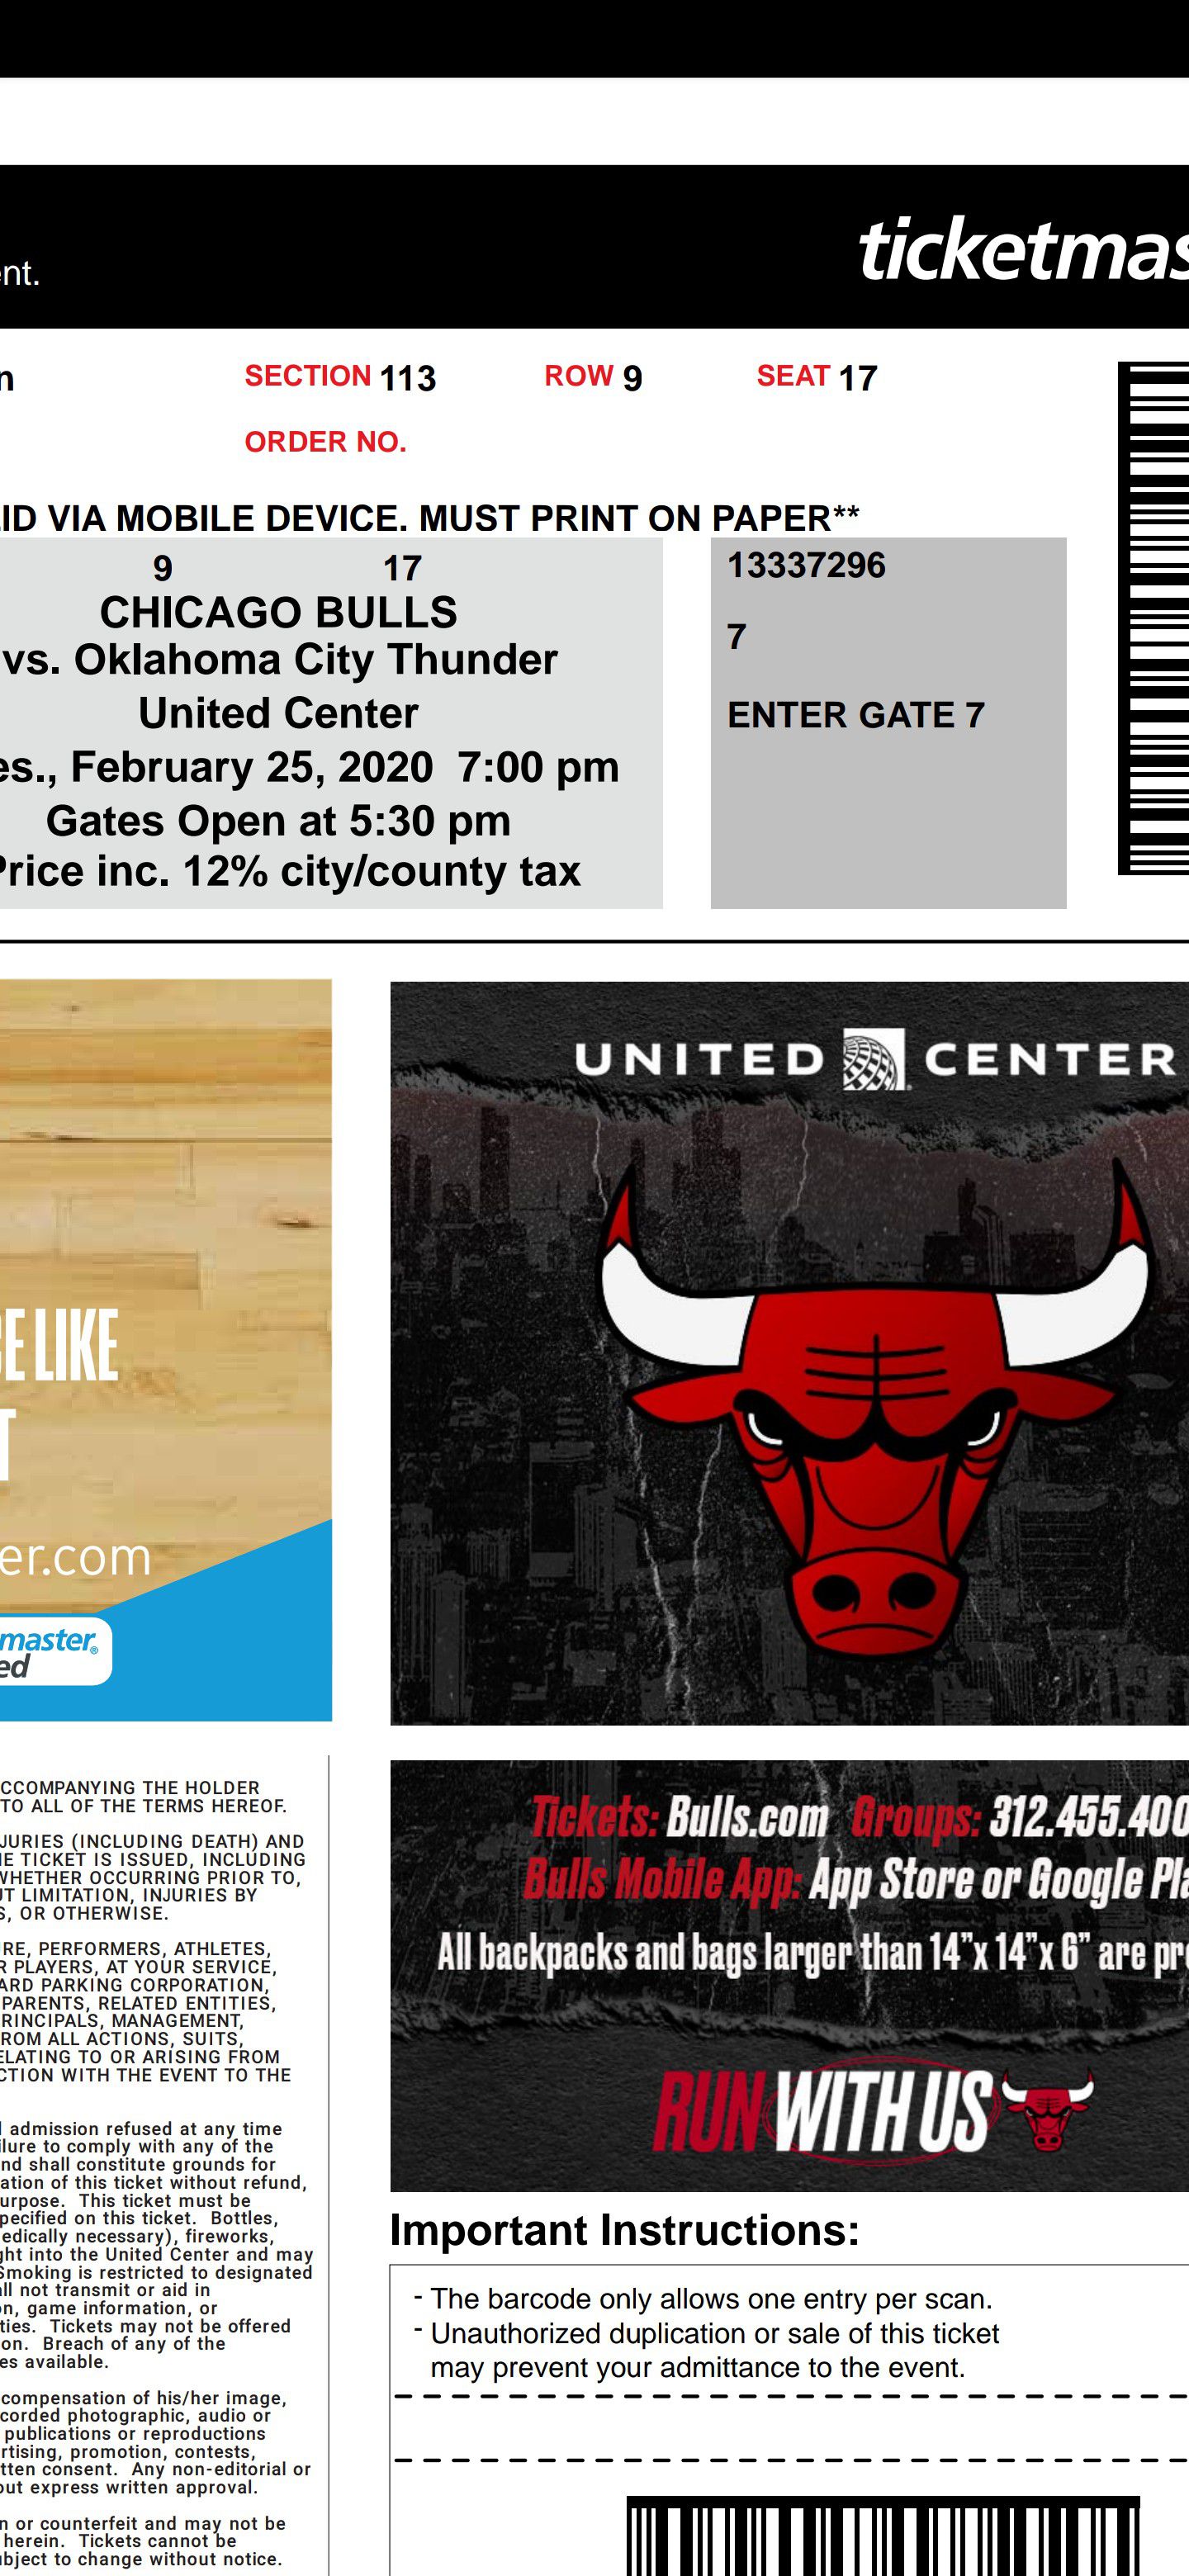 Chicago Bulls tickets near courtside. 4 tickets near courtside